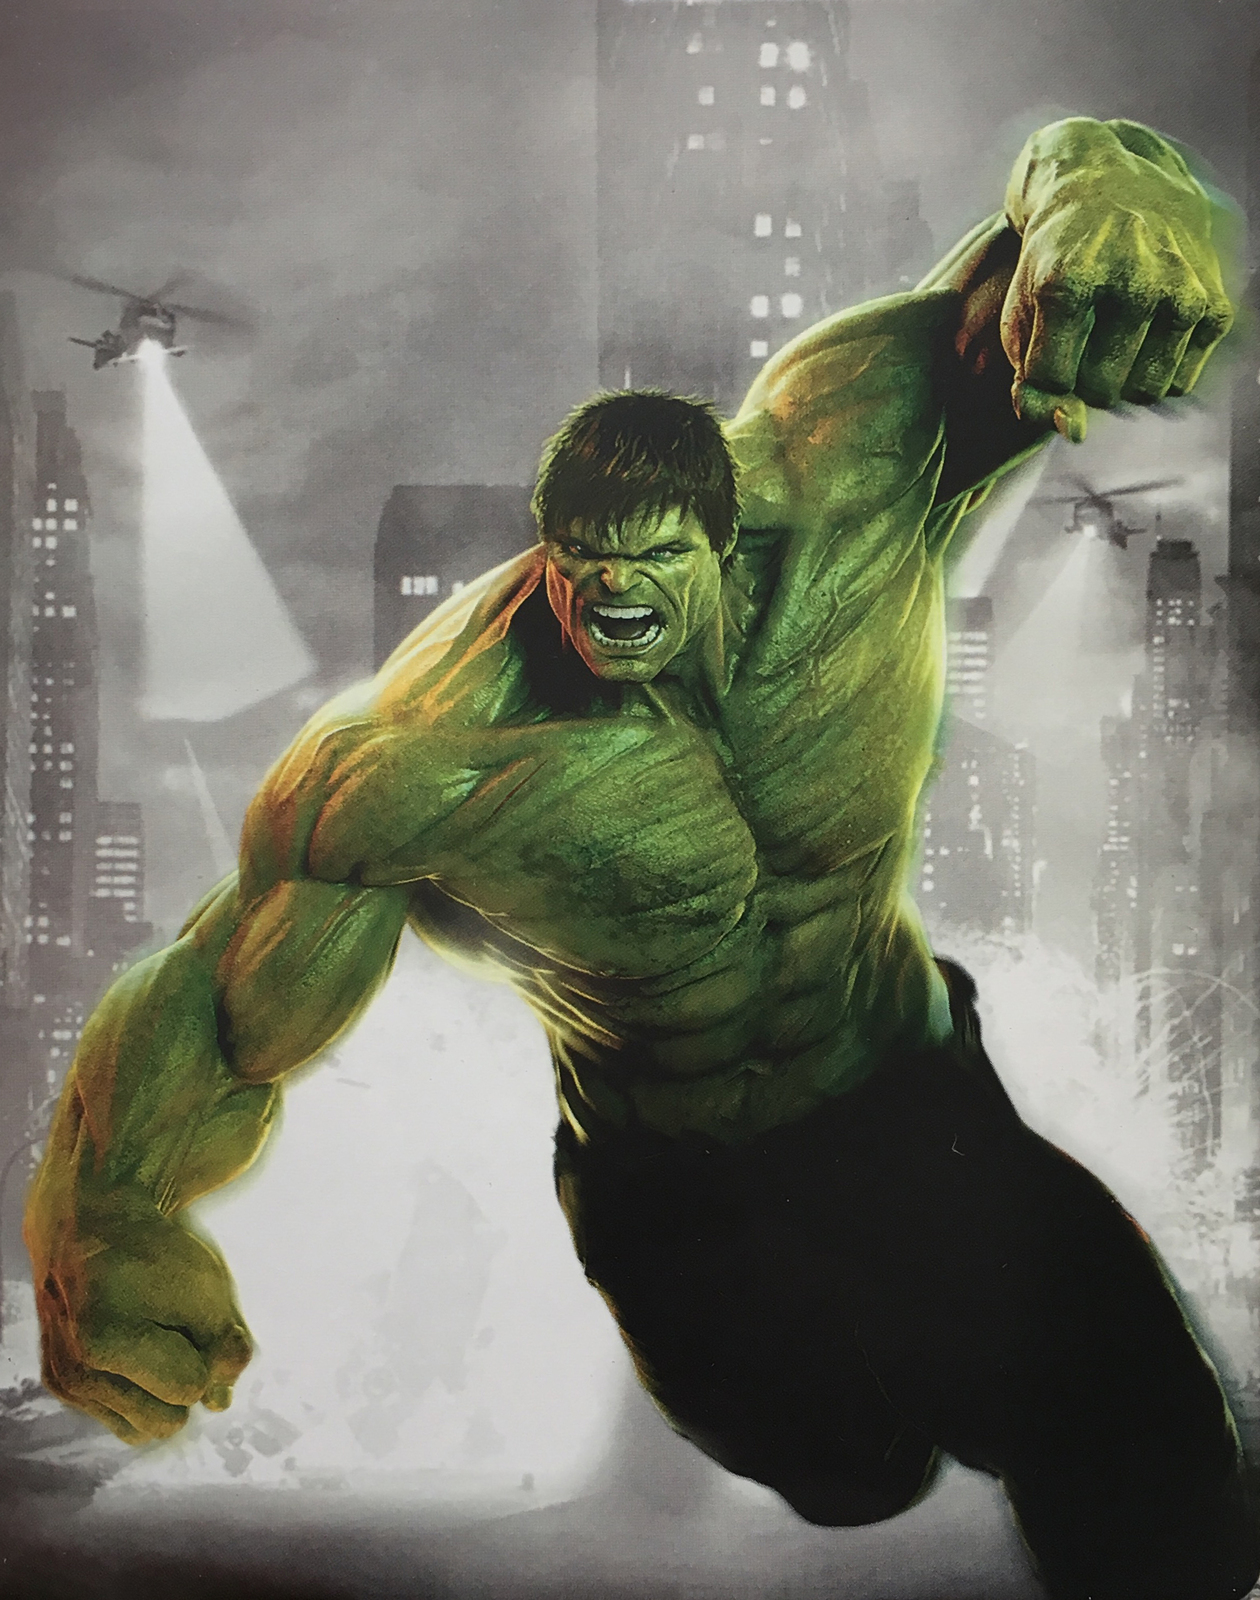 The Incredible Hulk Poster 2008 Marvel Movie Textless Art Film Print 24x36